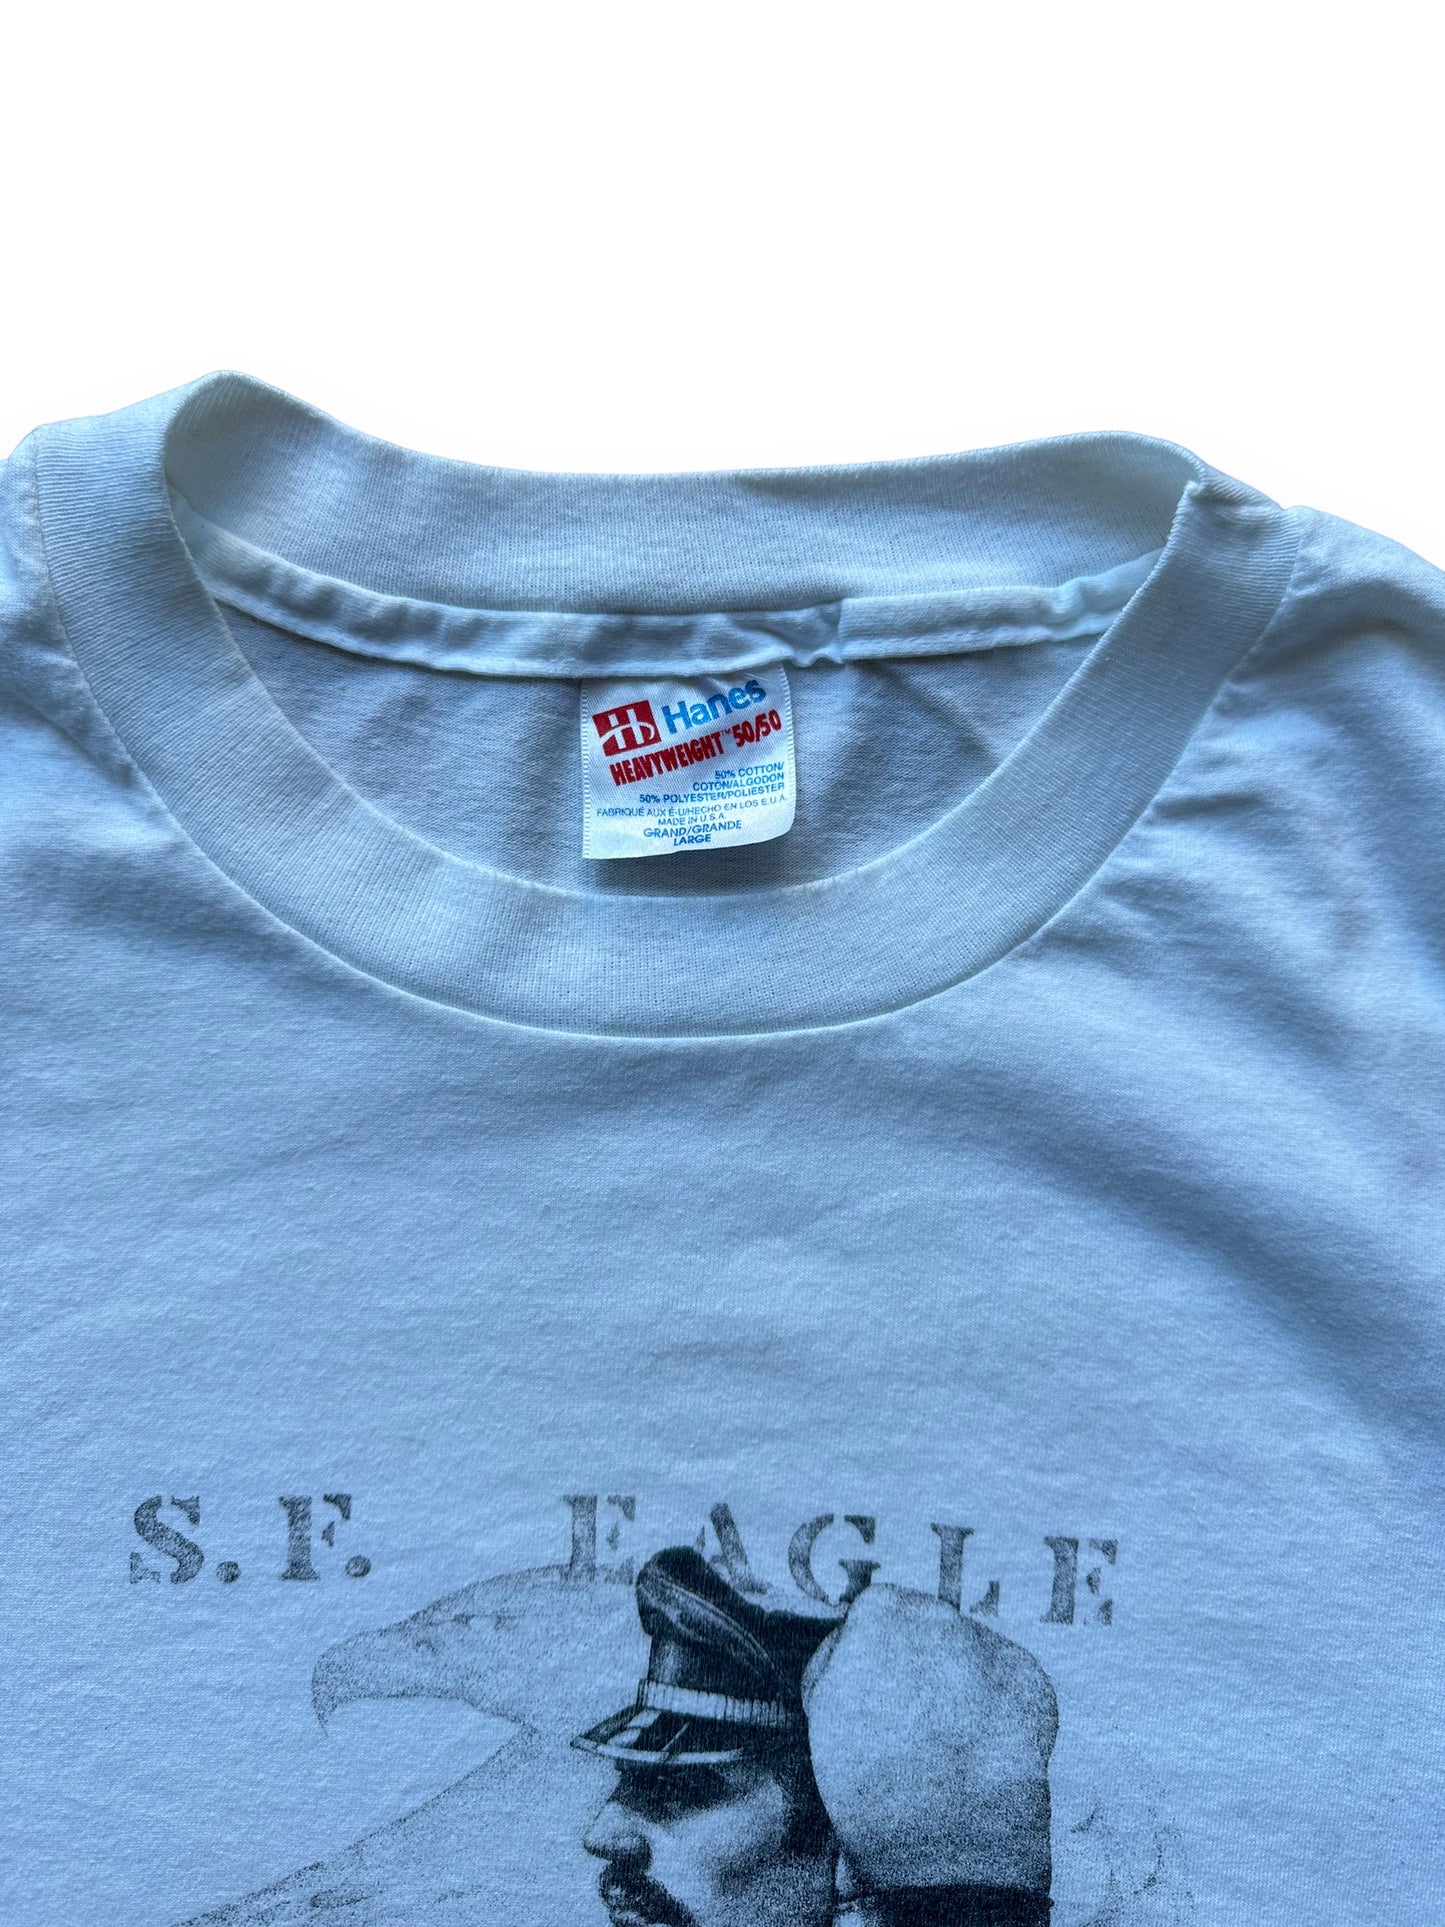 Collar shot of Vintage San Francisco Eagle Bar Tee | Vintage T-Shirts Seattle | Barn Owl Vintage Tees Seattle